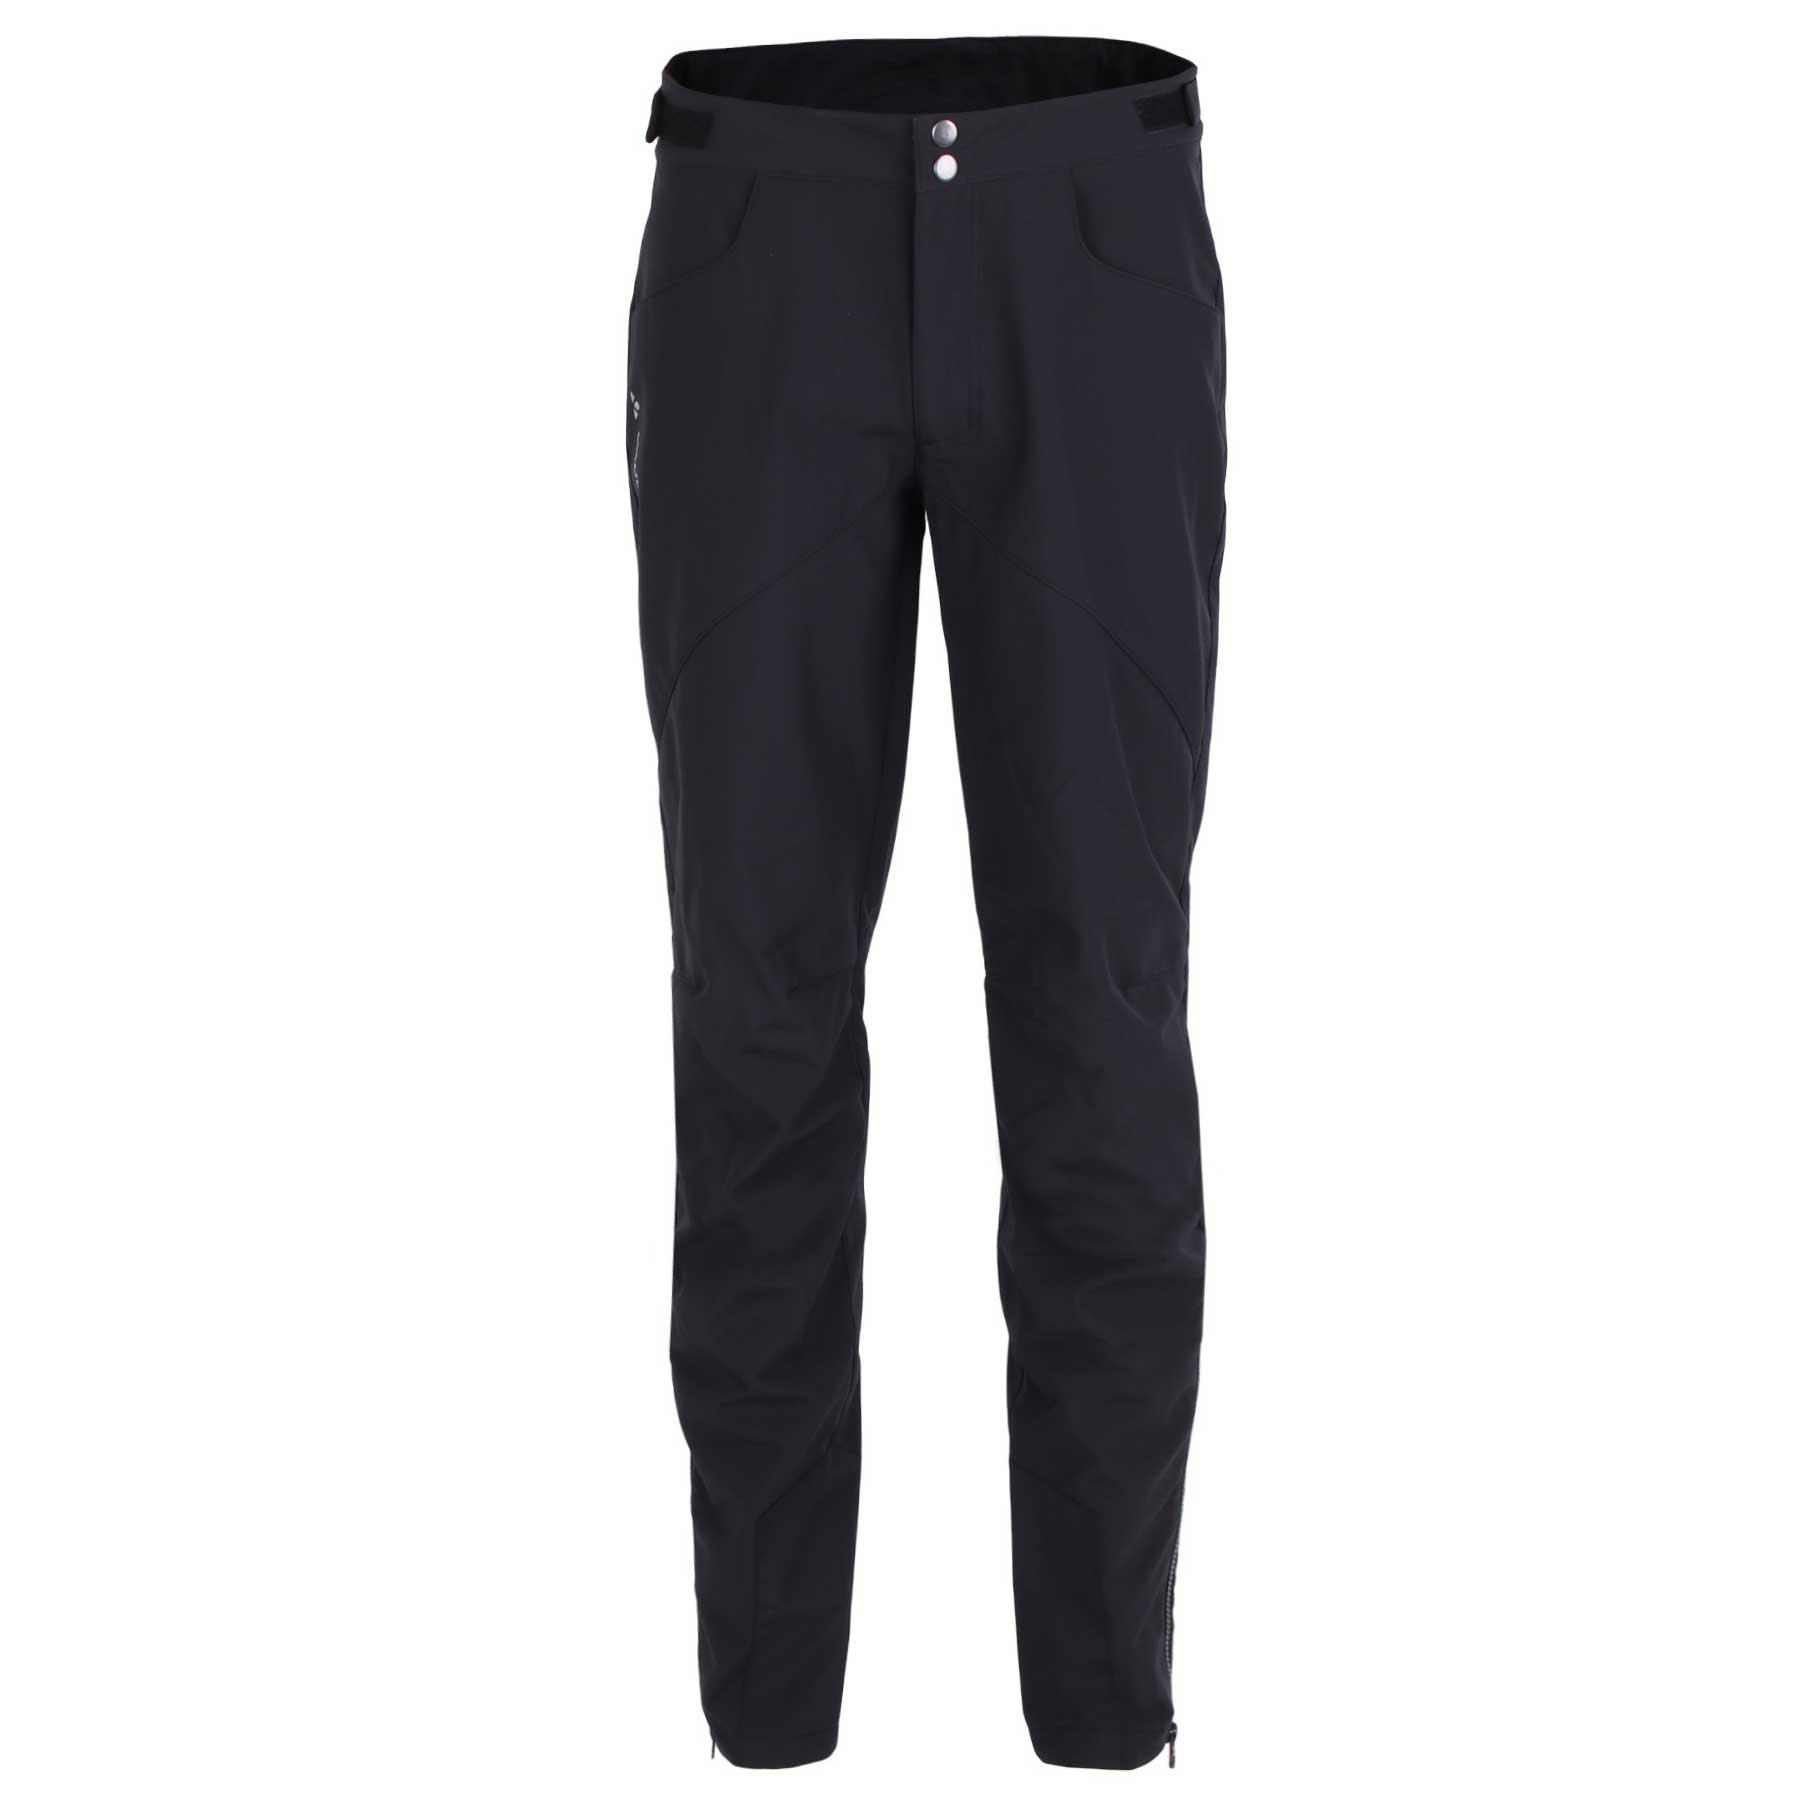 Image of Vaude SE Men's Ispica Softshell Pants - black